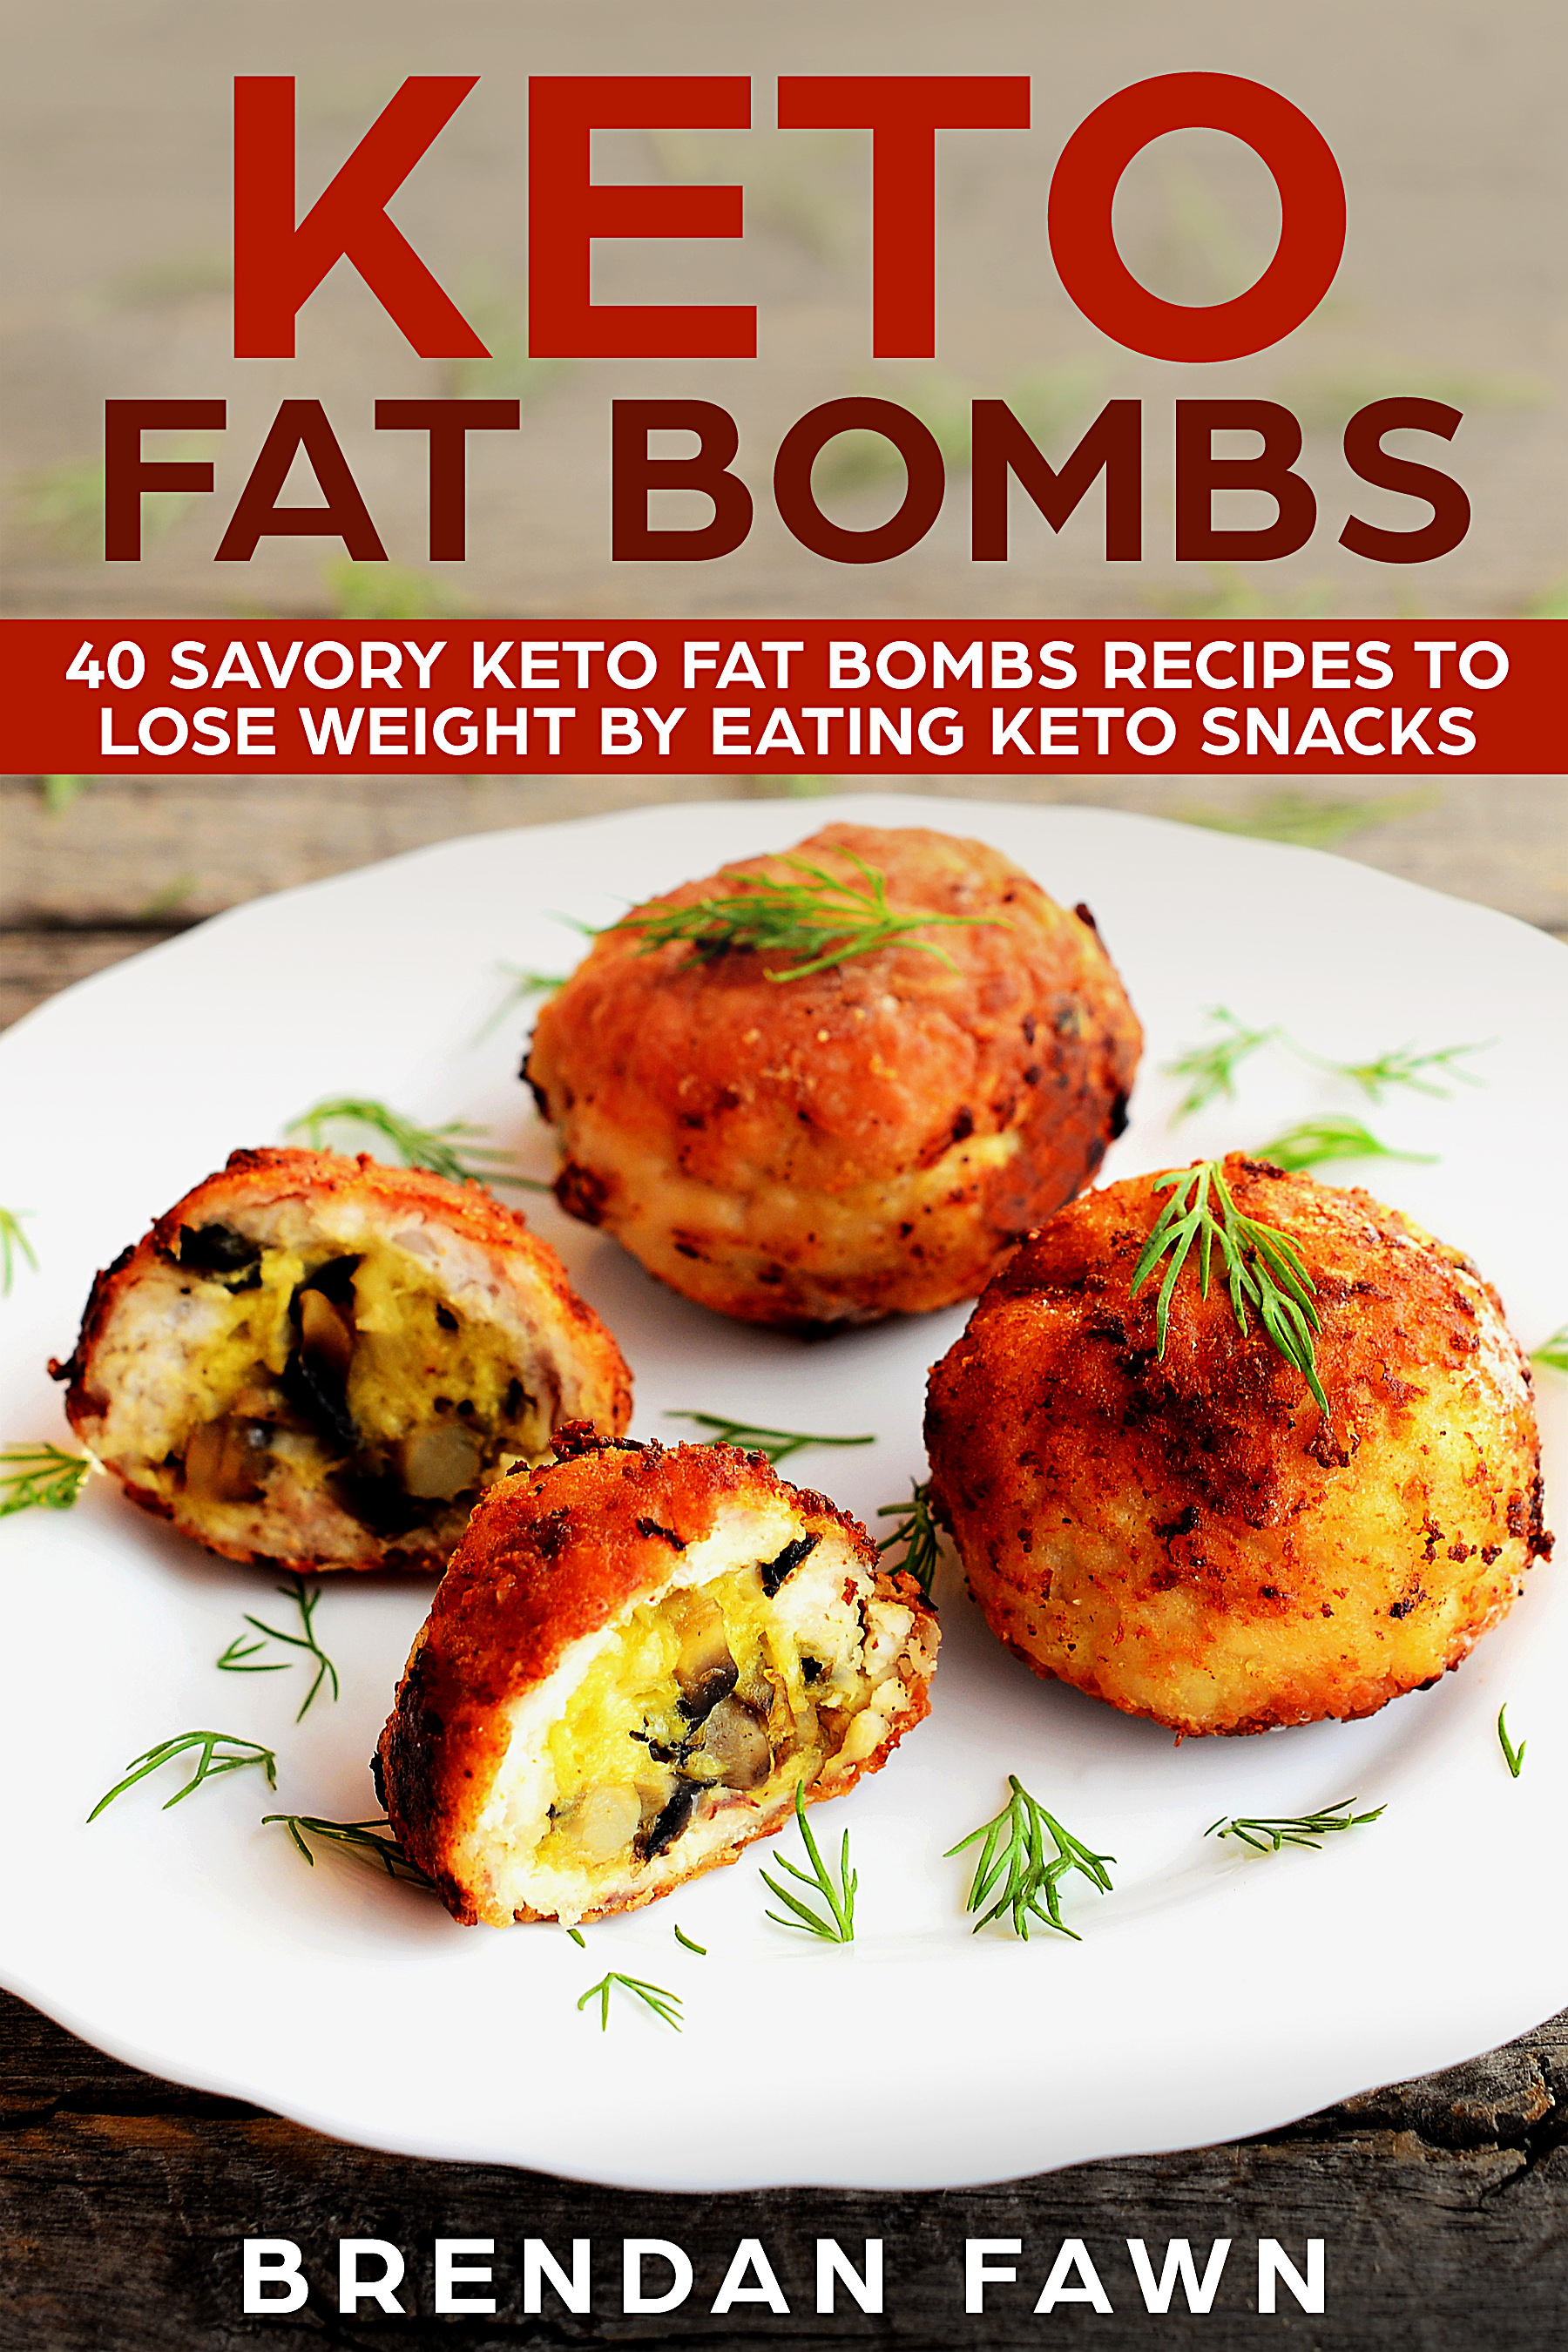 FREE: Keto Fat Bombs by Brendan Fawn